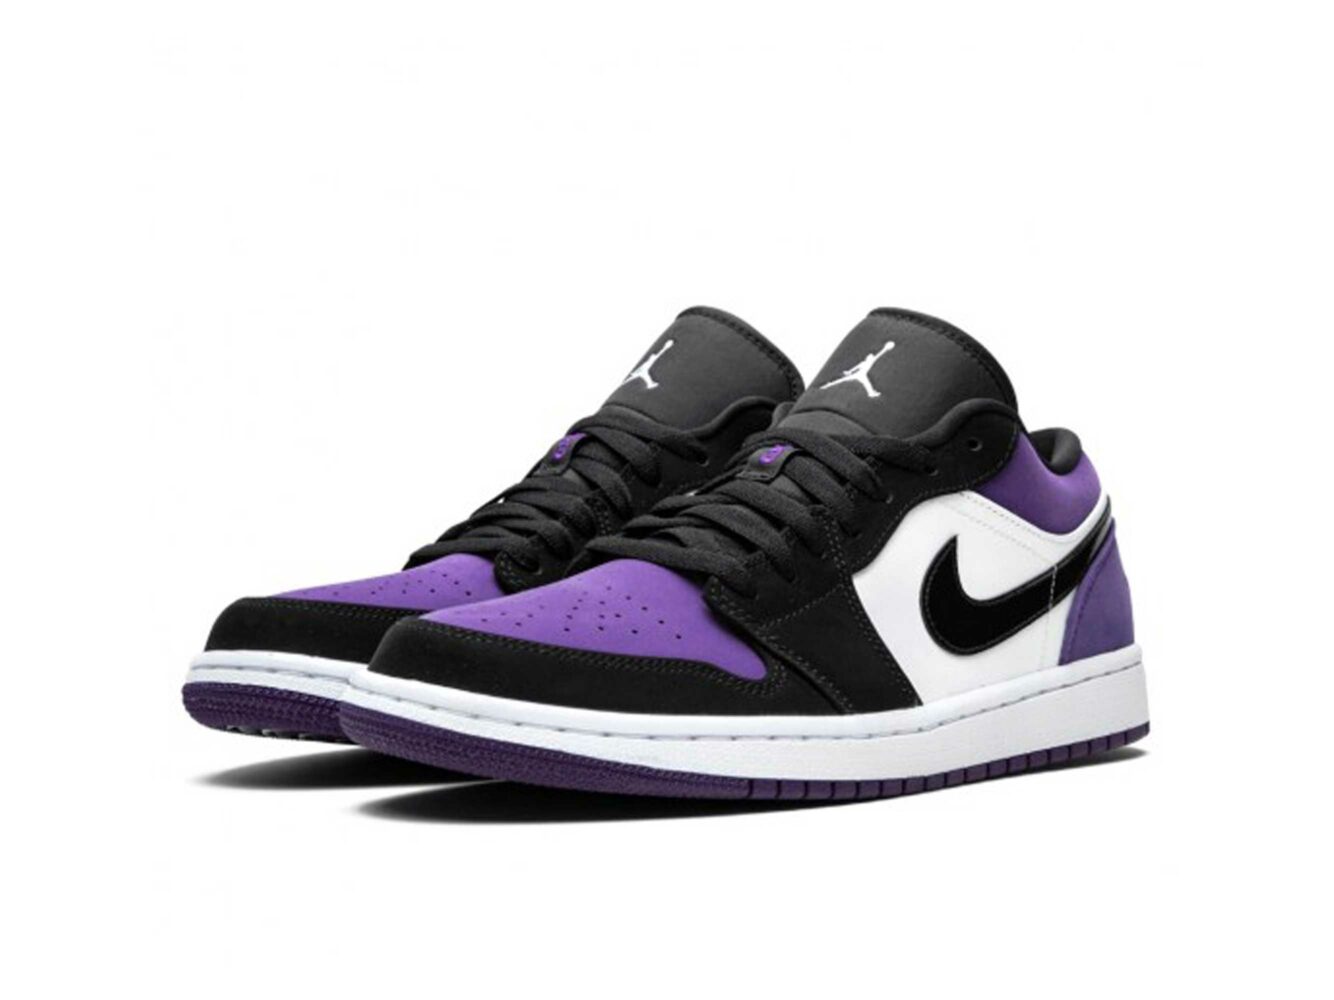 nike air Jordan 1 low court purple 553558_125 купить